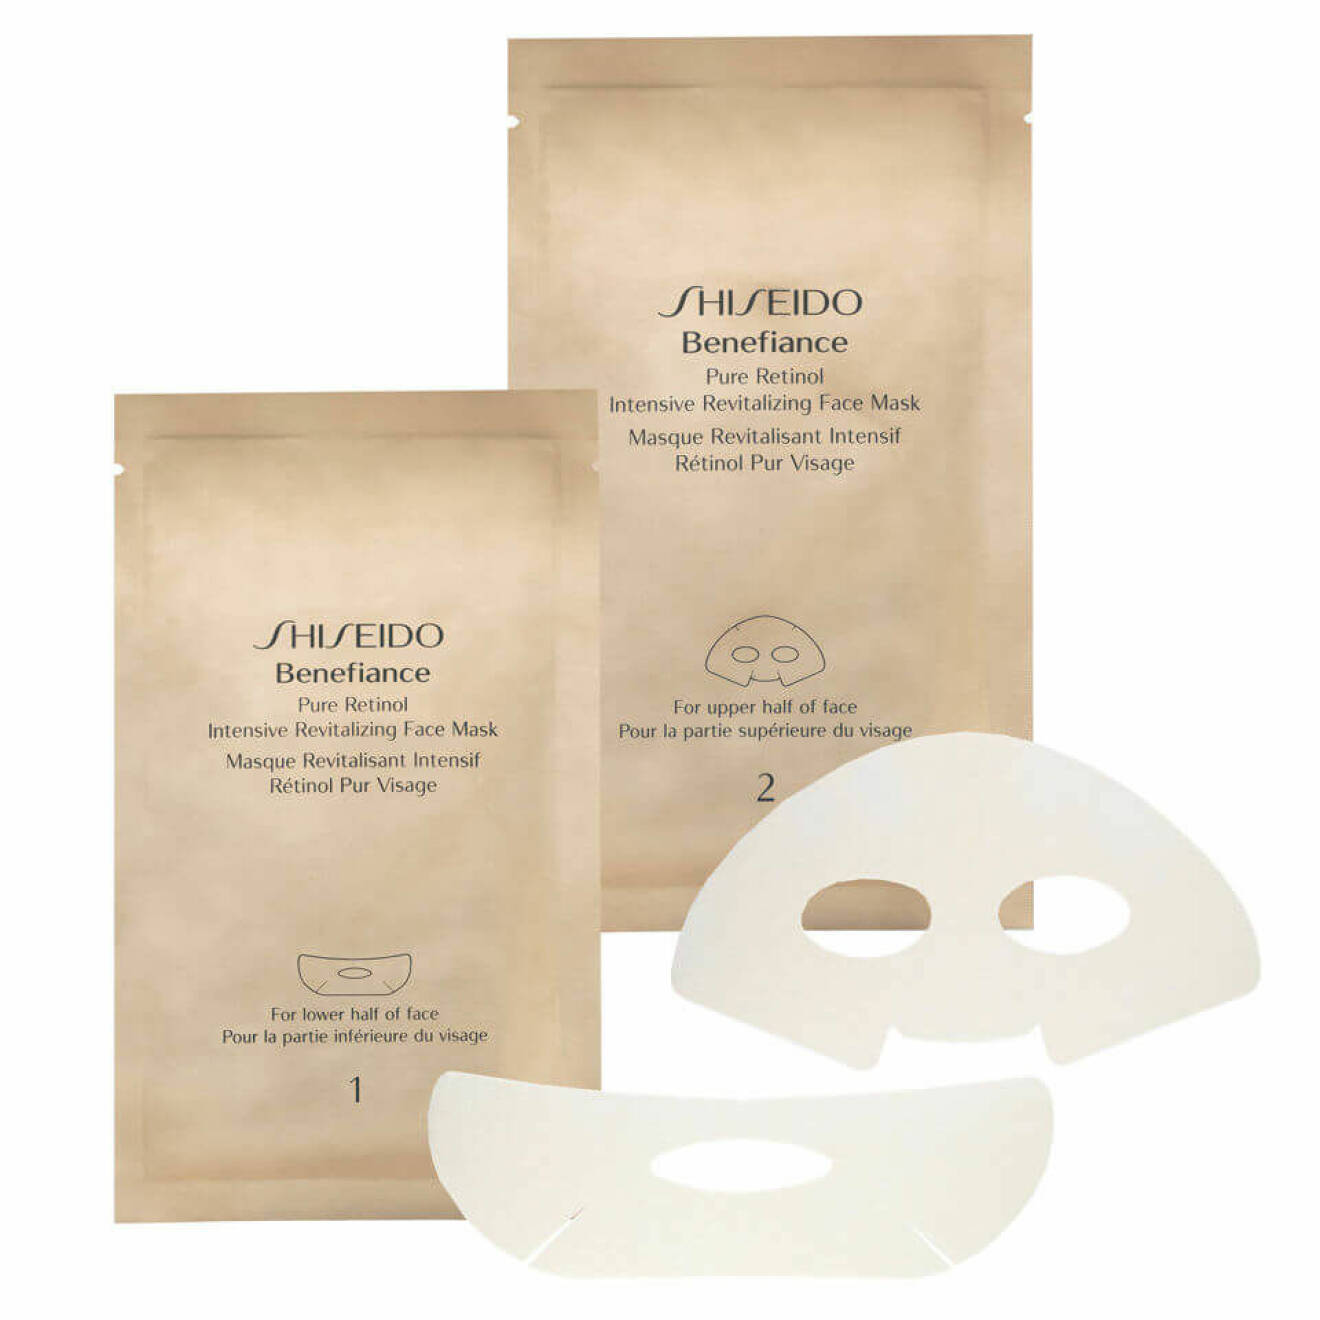 Benefiance pure retinol face mask från Shiseido.